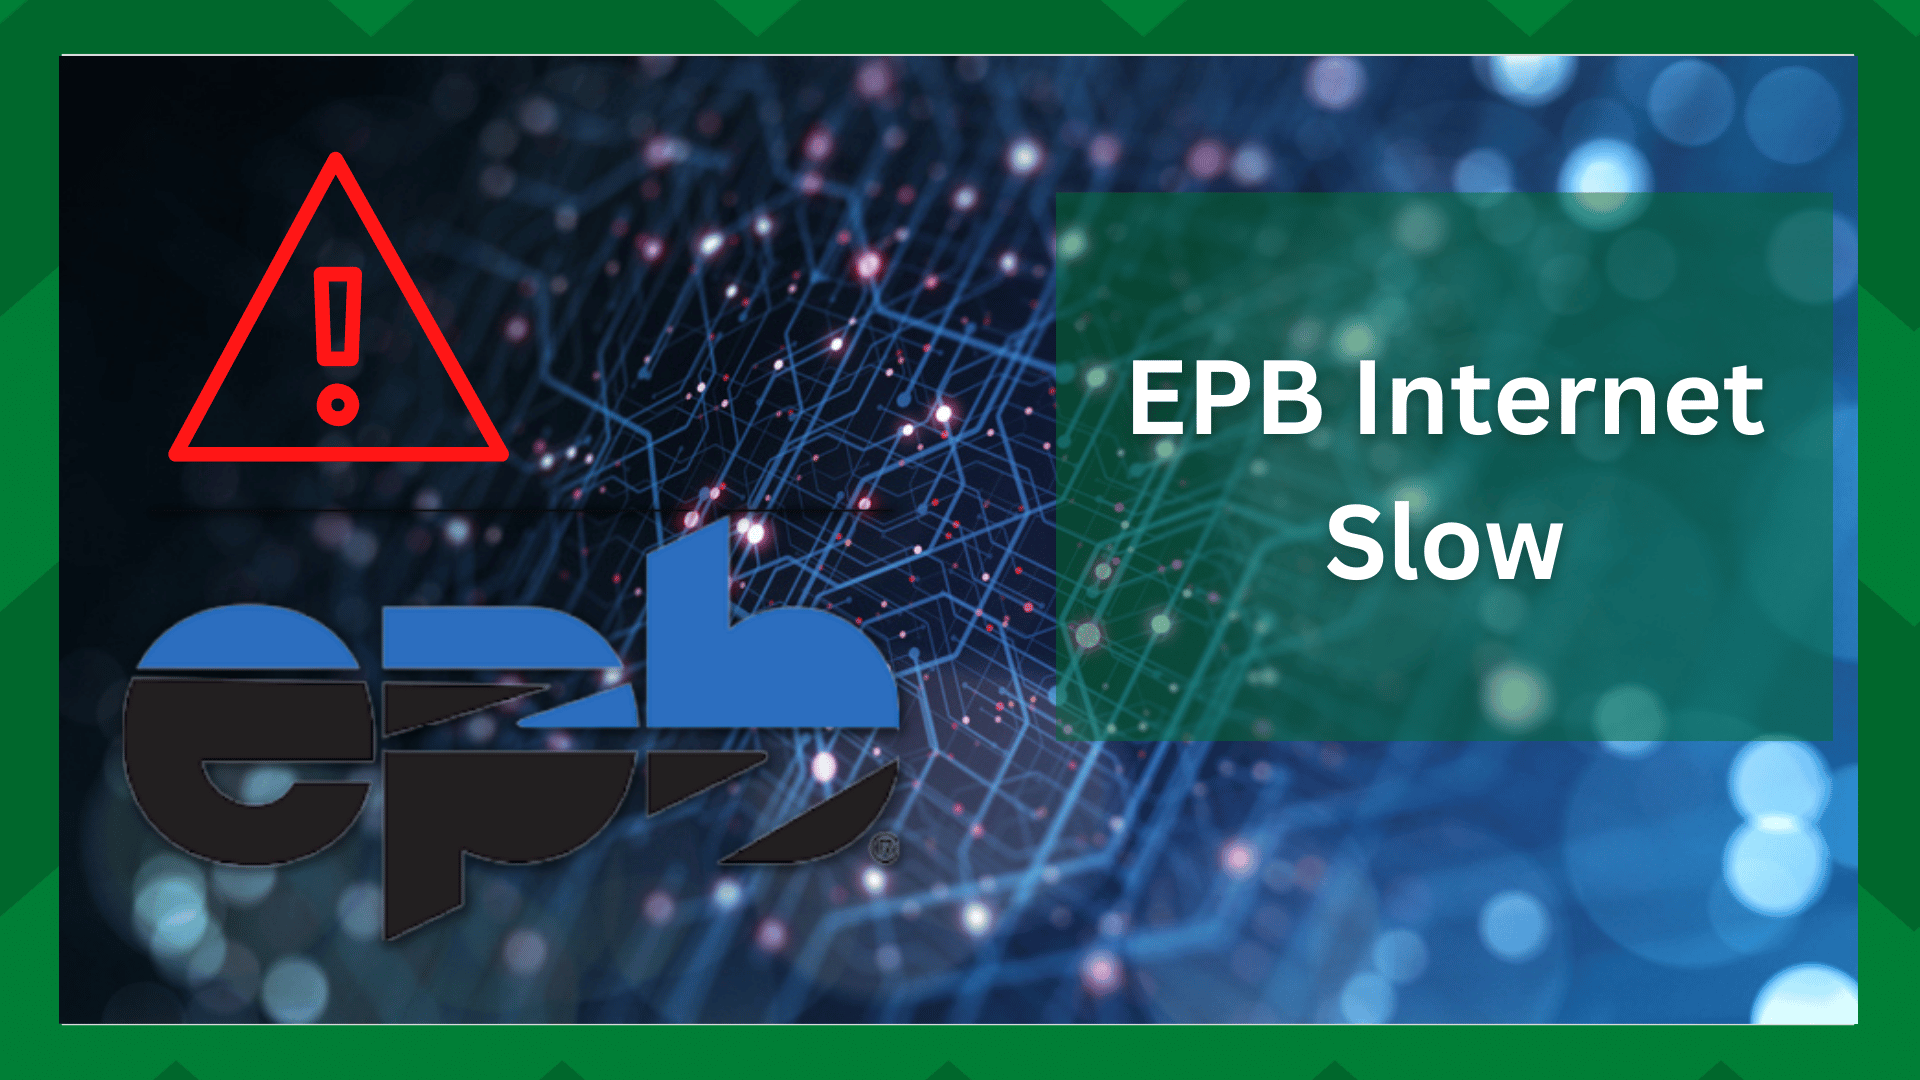 EPB Internet Slow